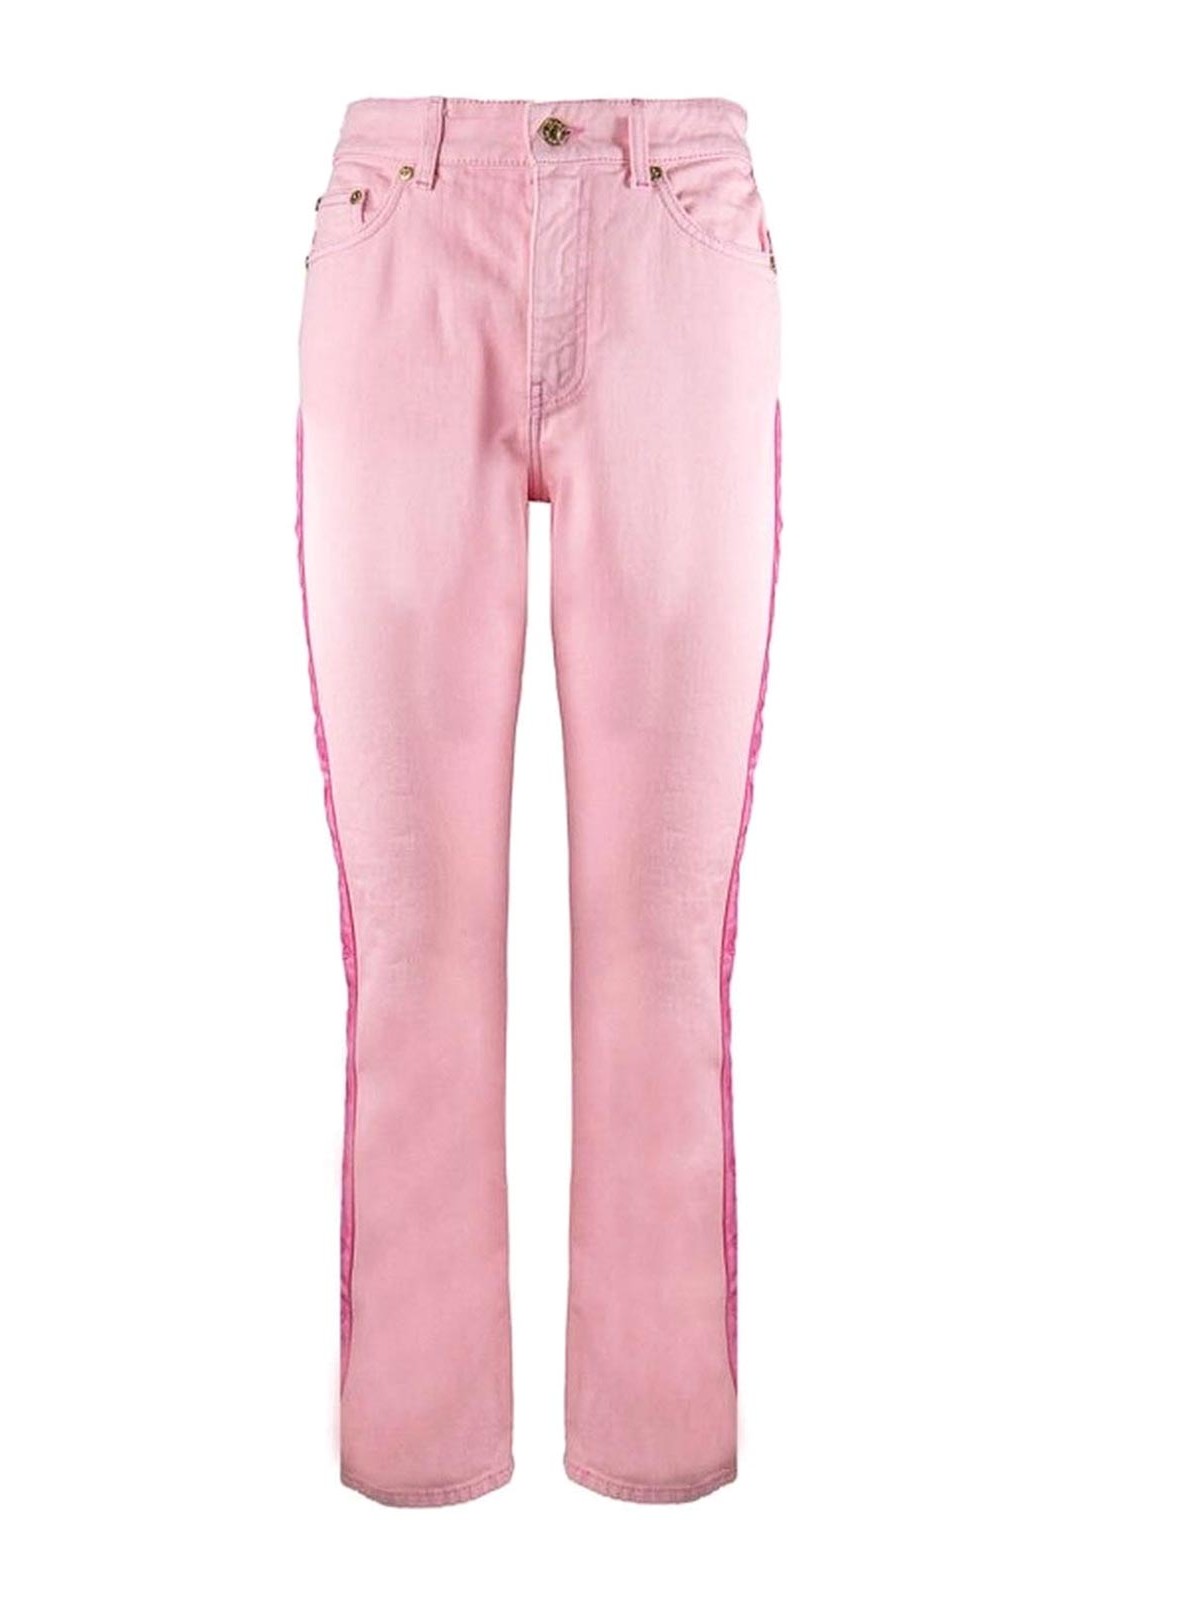 Chiara Ferragni Pink Trousers